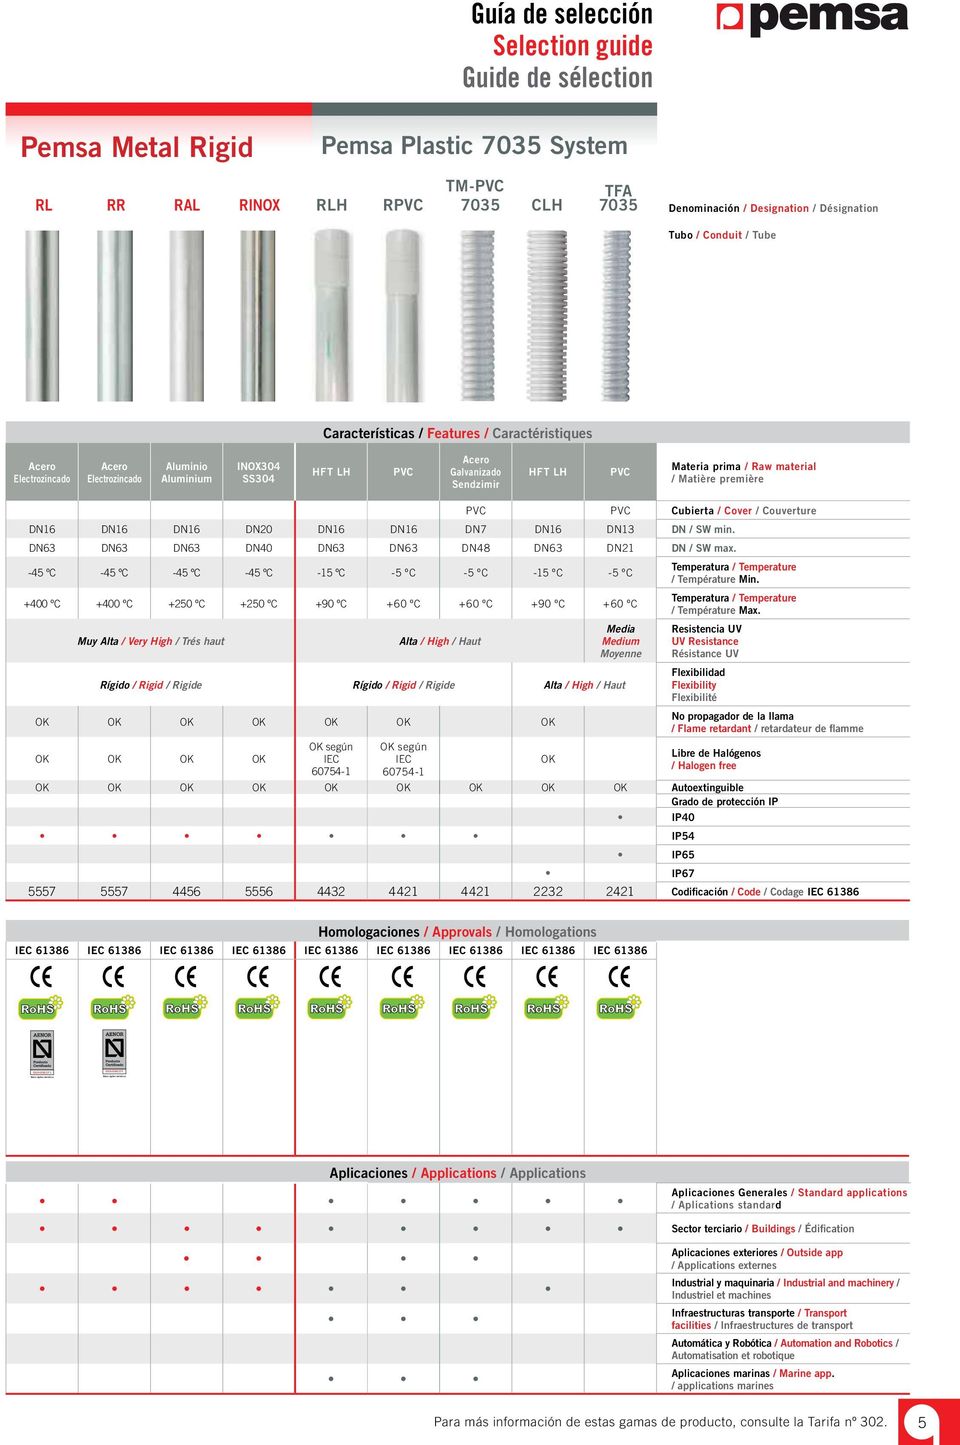 Acero Galvanizado Sendzimir HFT LH PVC Materia prima / Raw material / Matière première PVC PVC Cubierta / Cover / Couverture DN16 DN16 DN16 DN20 DN16 DN16 DN7 DN16 DN13 DN / SW min.